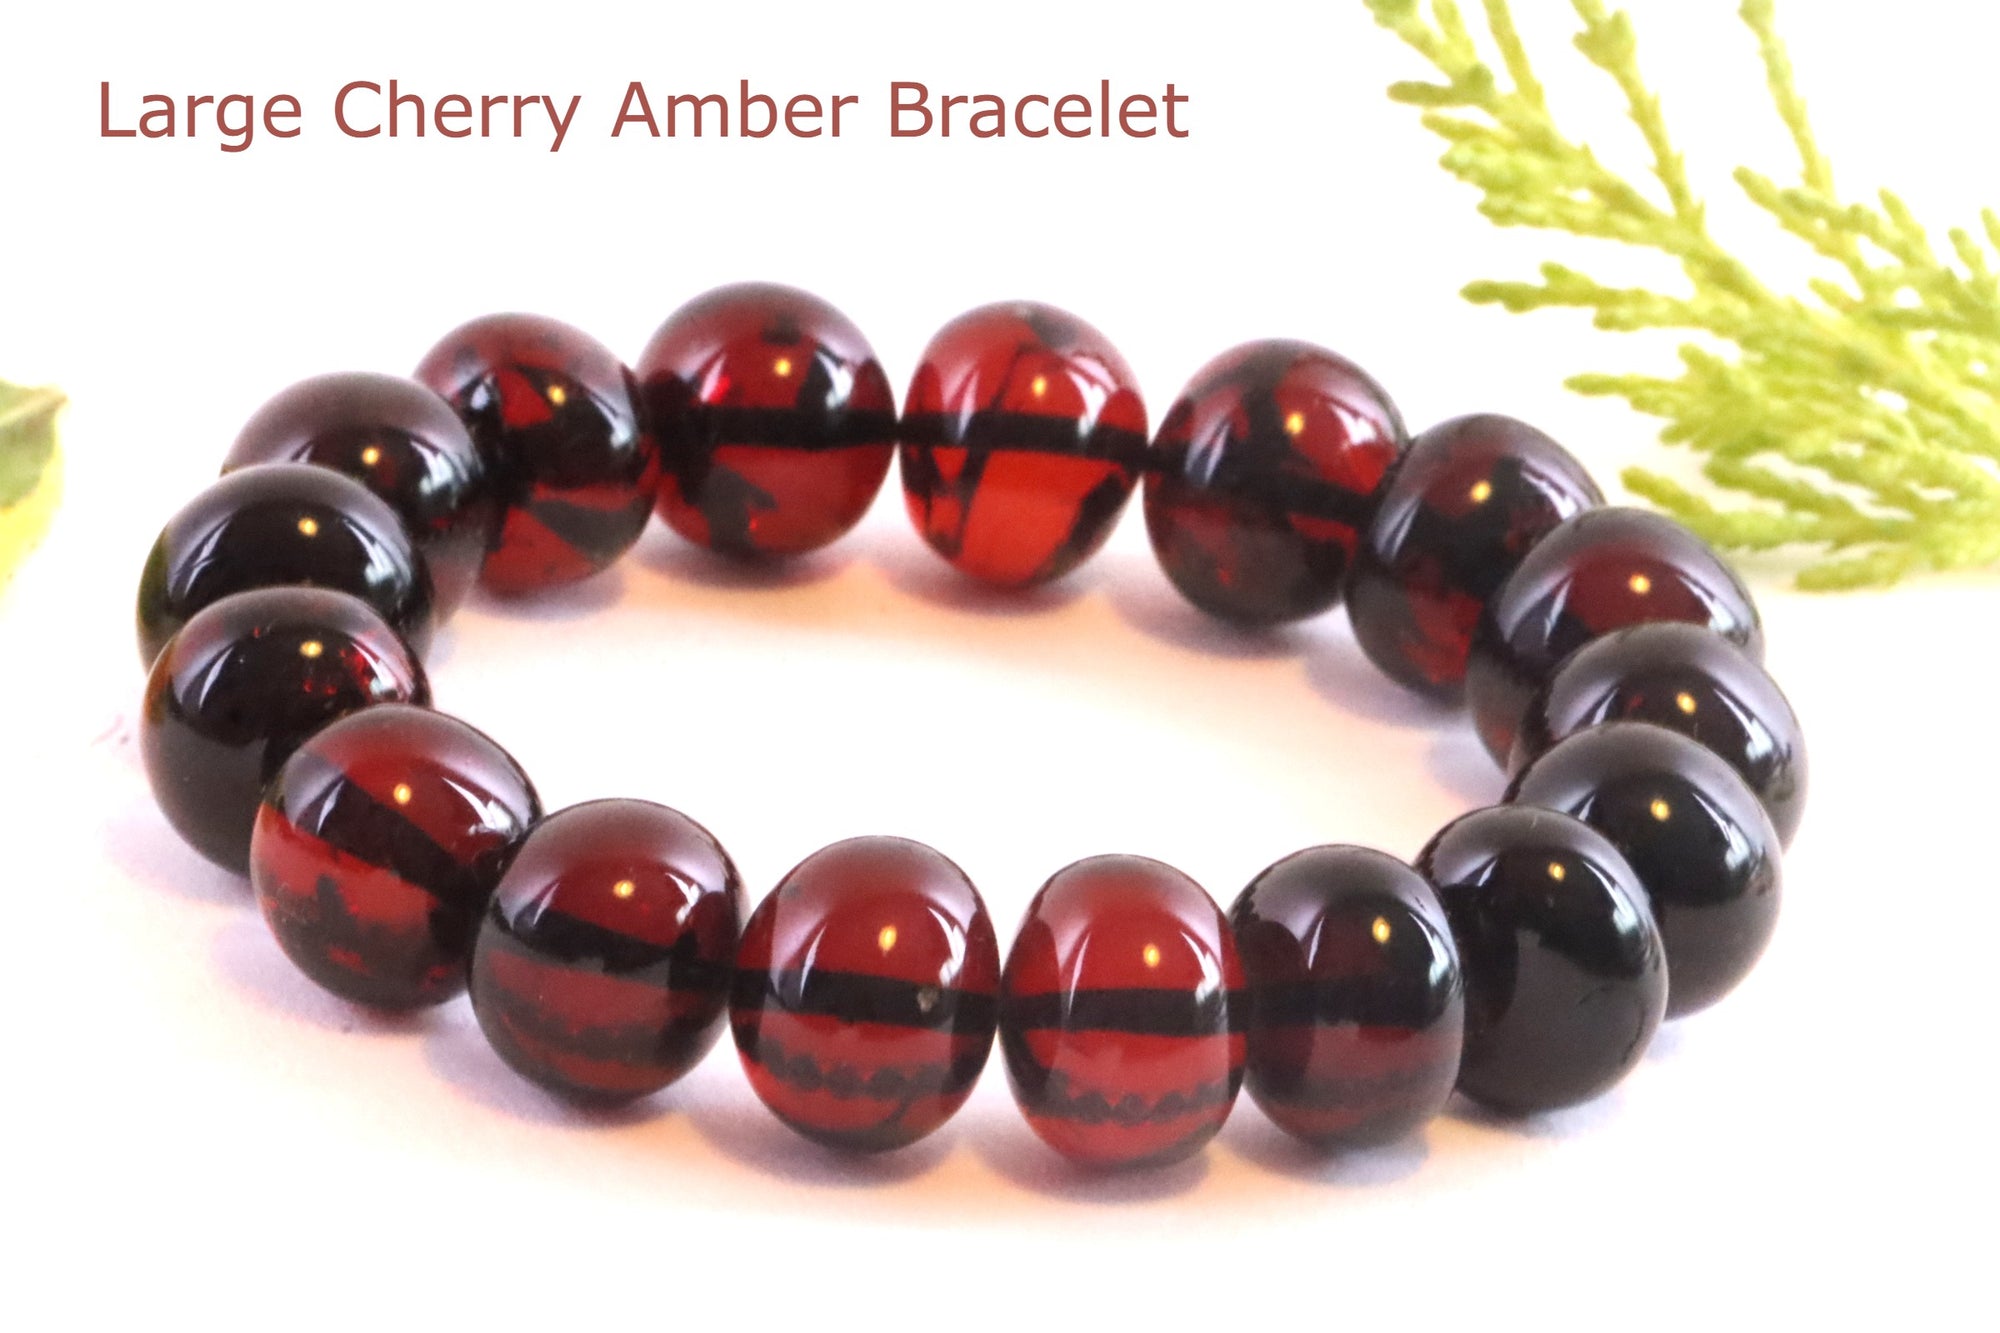 Luxurious Cherry Amber Bracelet.